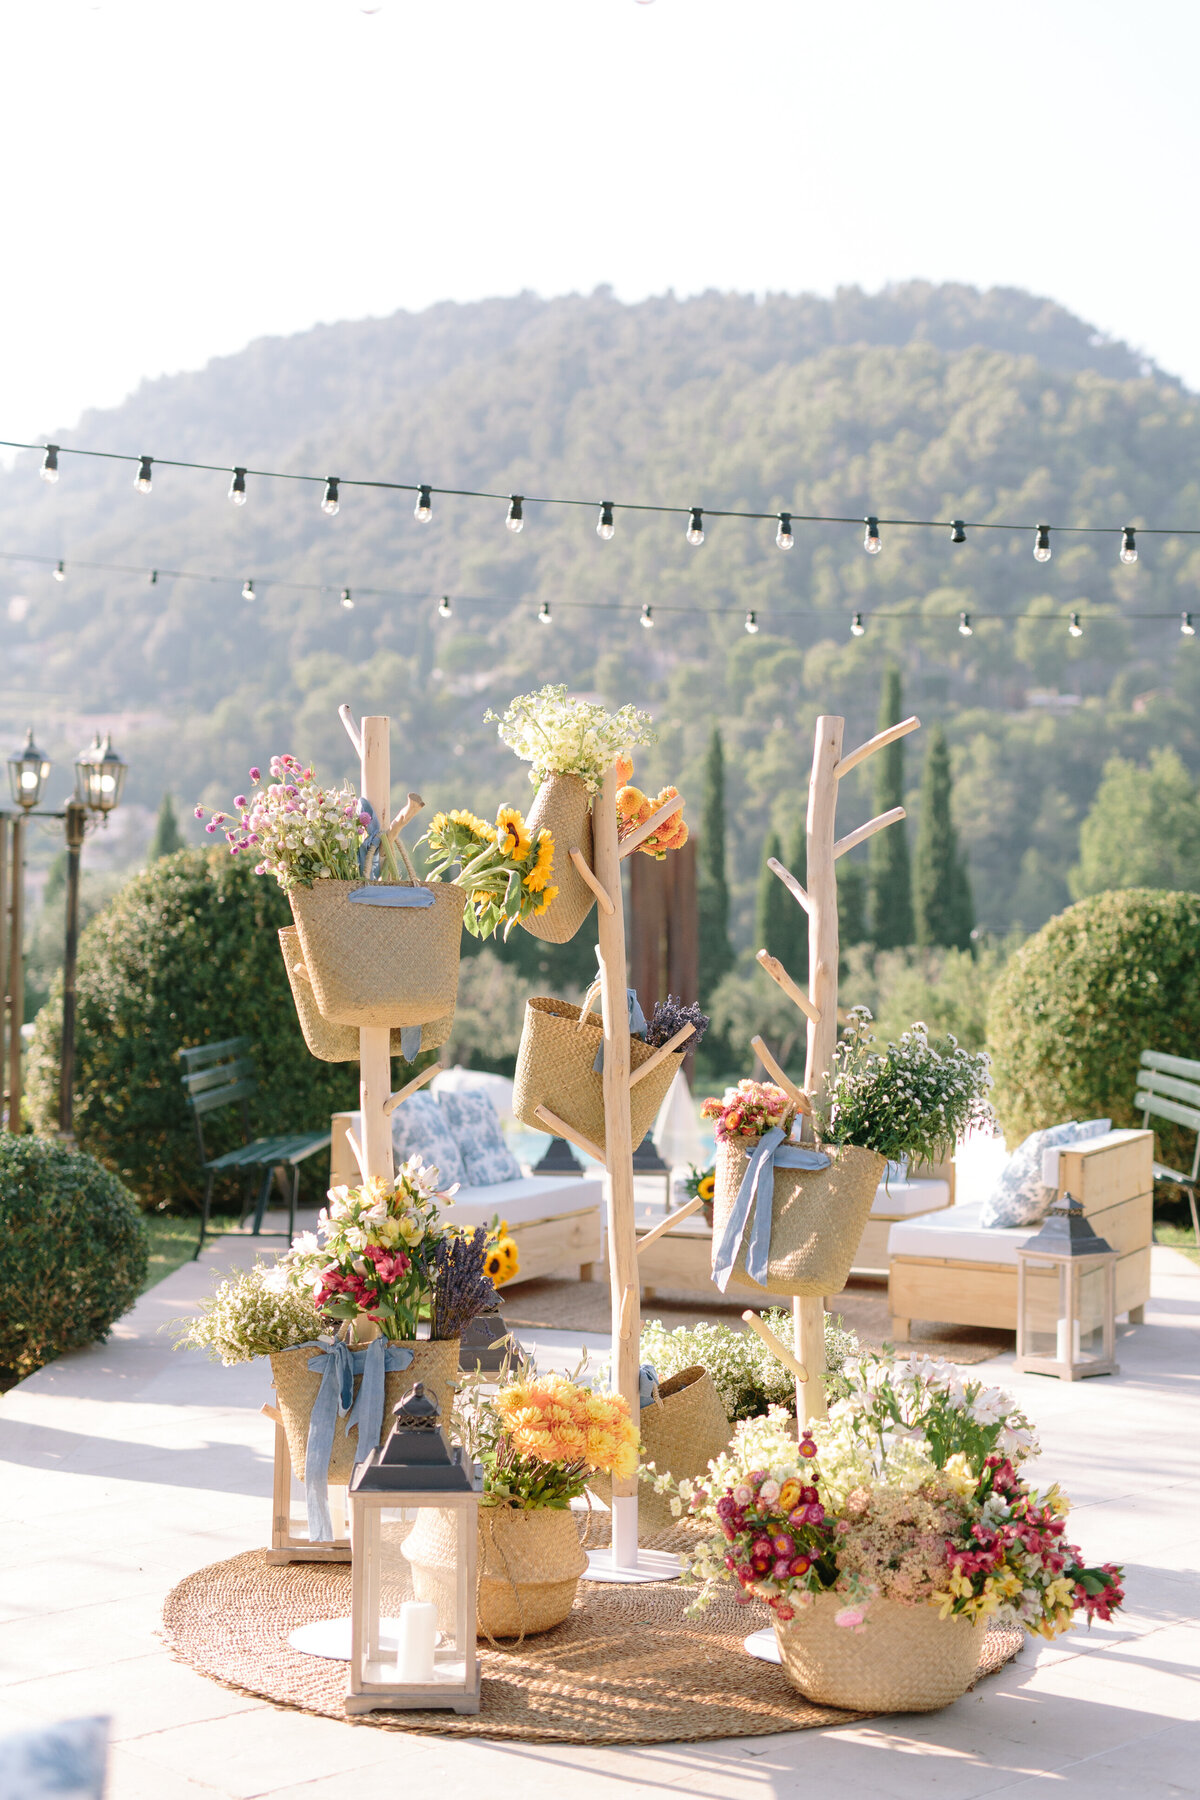 Garden-themed decor, fresh flowers and wicker basket Château Saint Martin